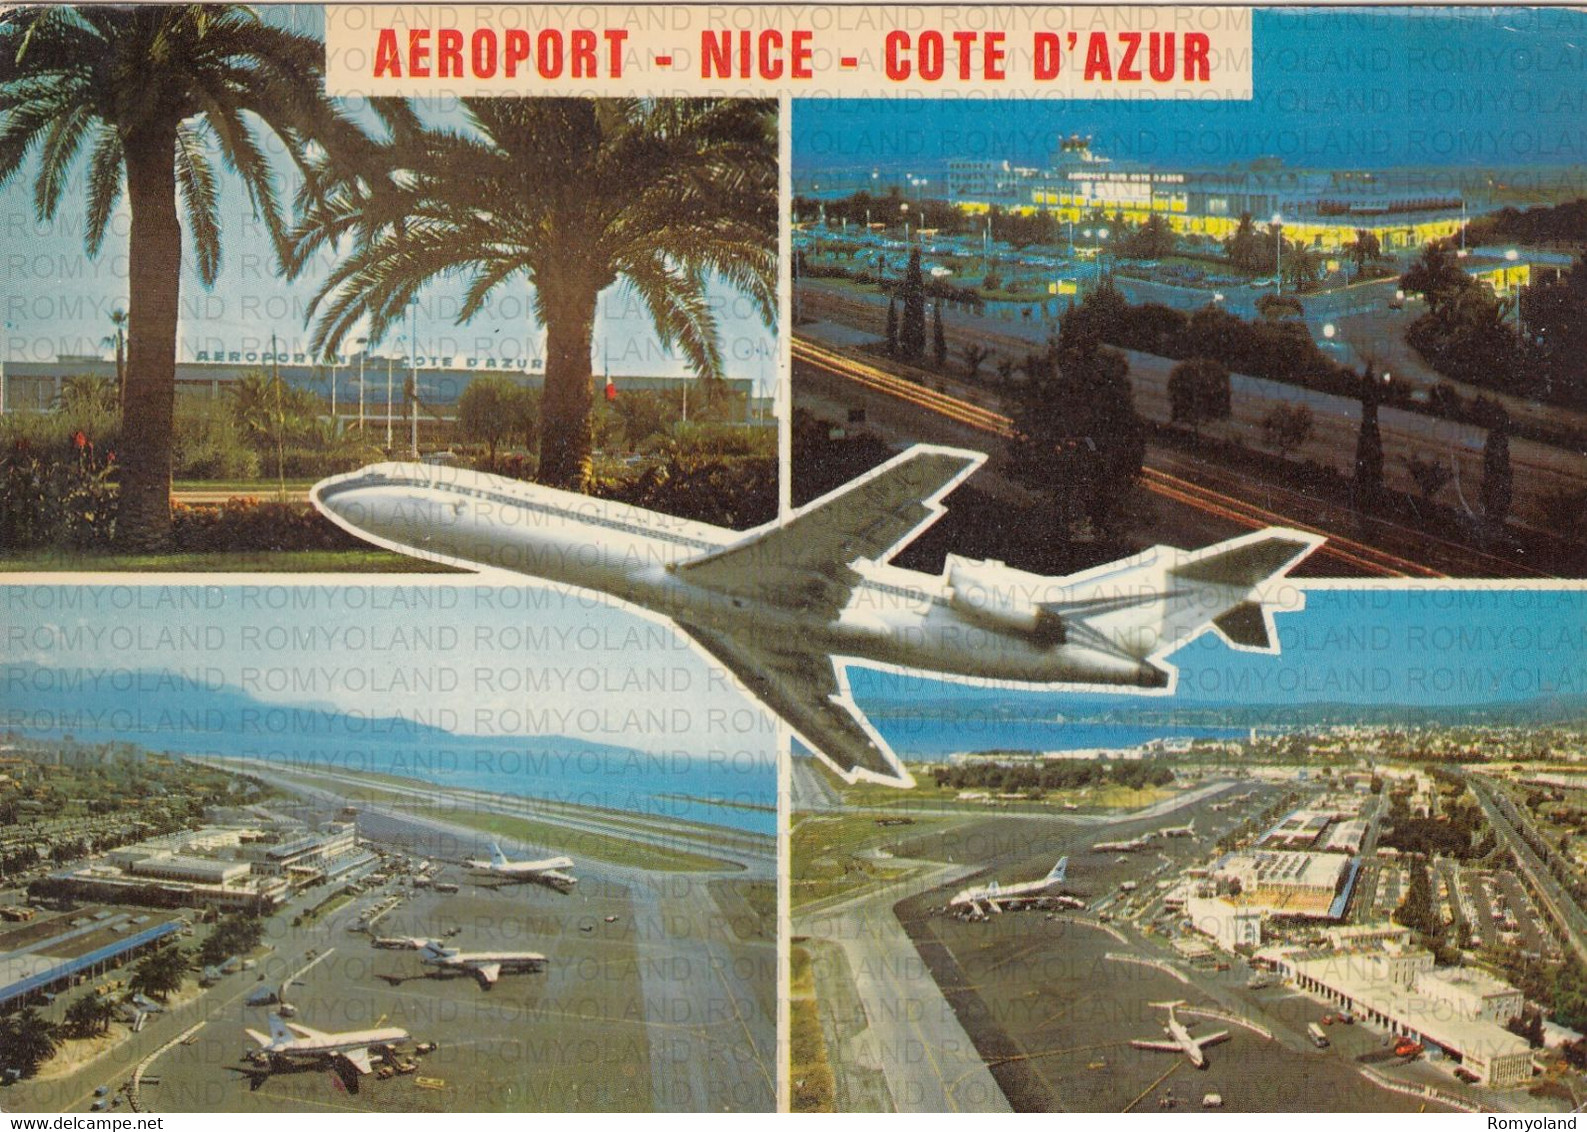 CARTOLINA  NICE,ALPES MARITIMES,FRANCIA,AEROPORT-COTE D"AZUR,VIAGGIATA 1979 - Transport Aérien - Aéroport